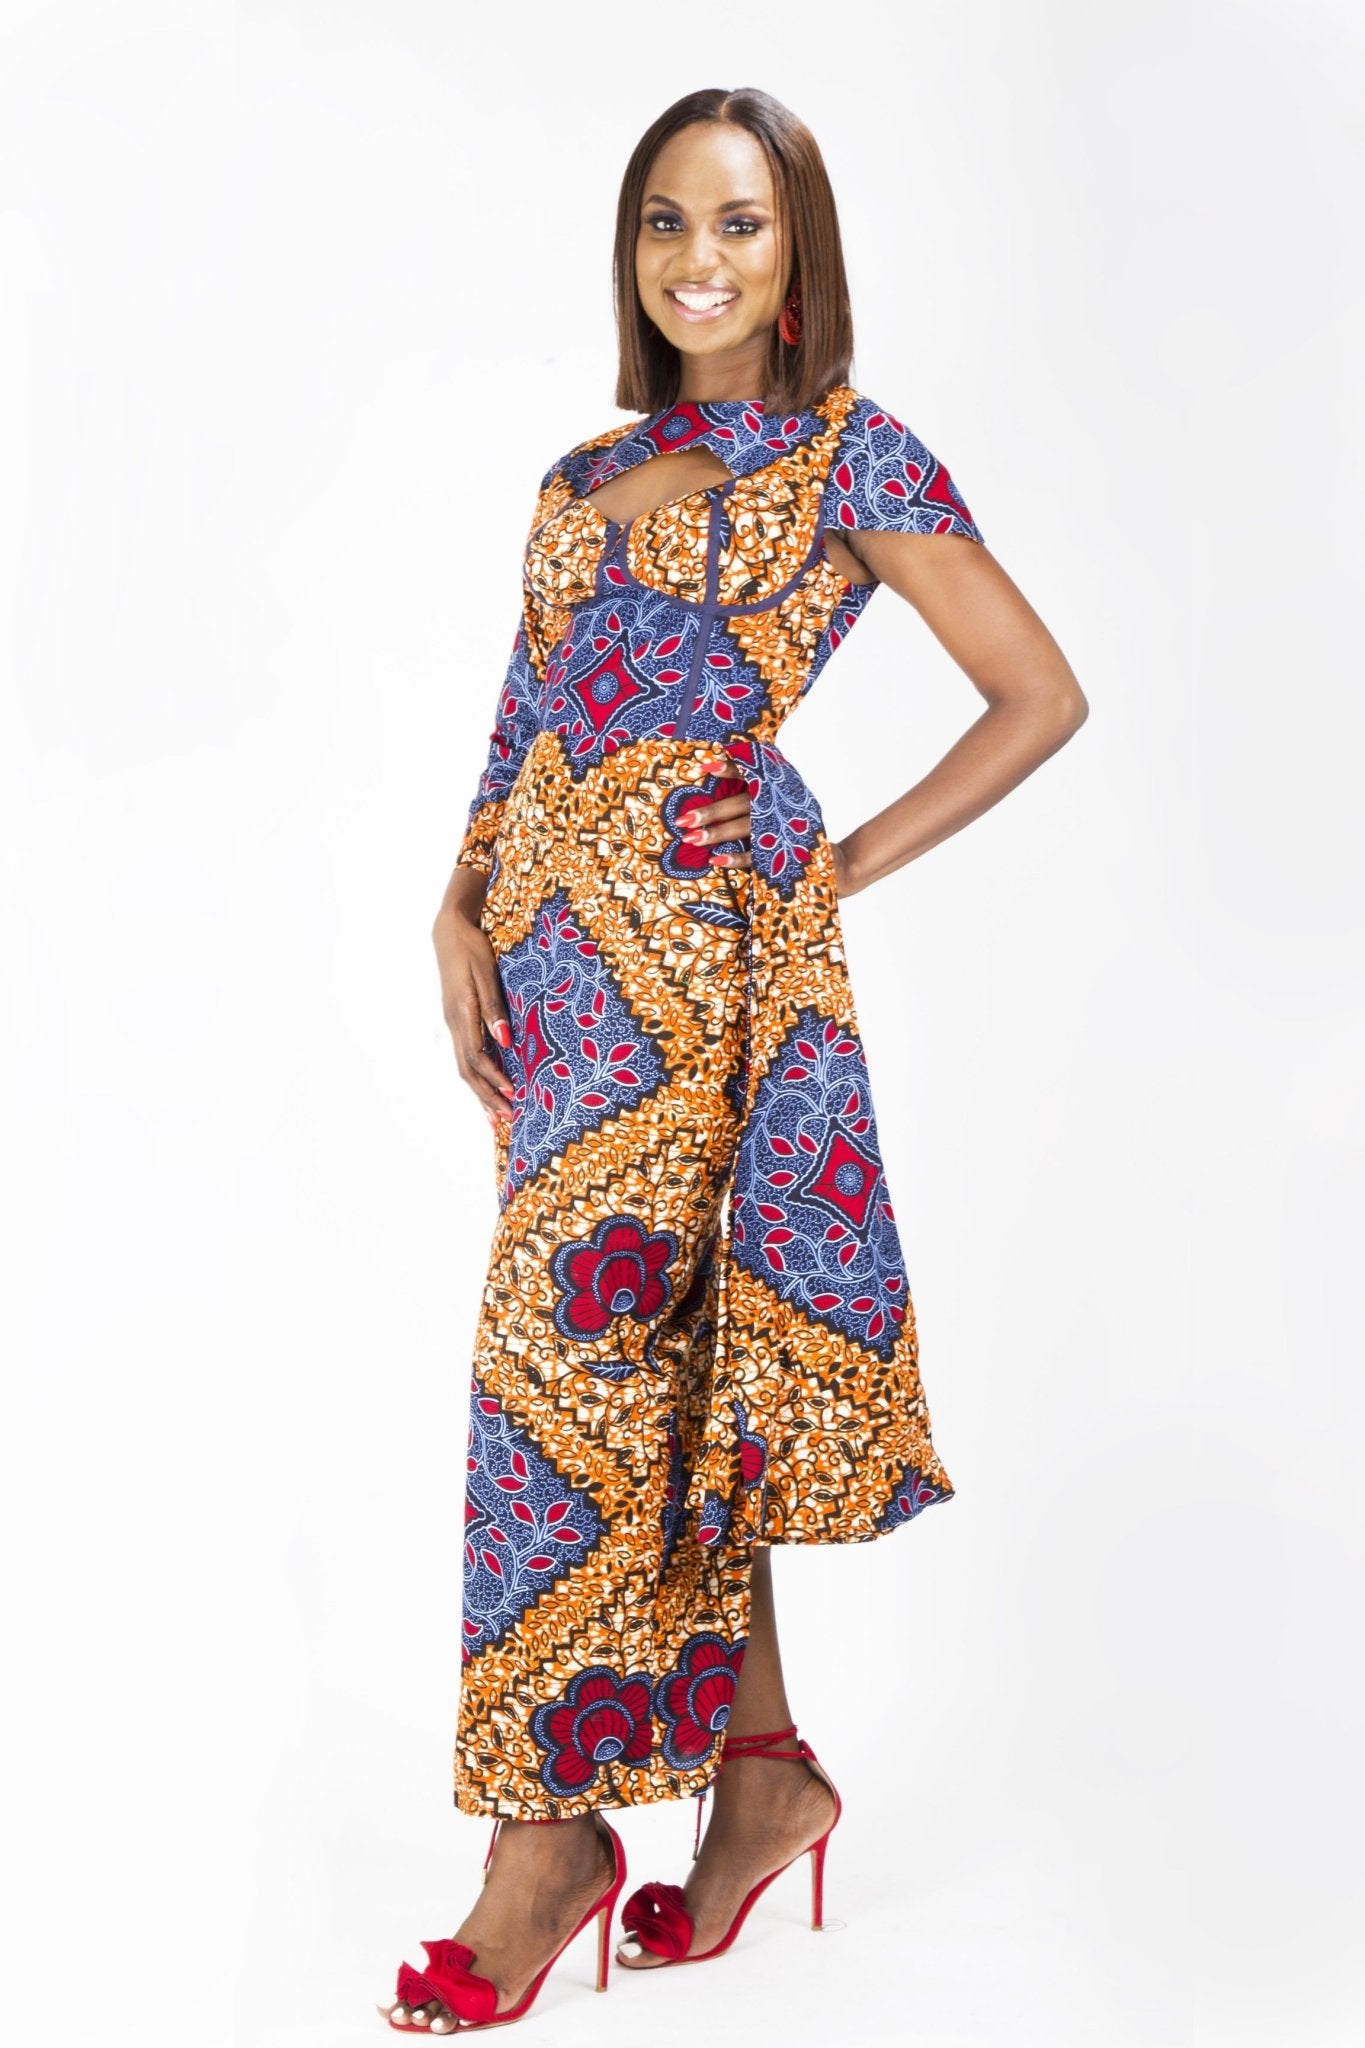 BROWN BLUE AFRICAN ANKARA PRINT PLUS SIZE CLOTHING PARTY DRESS - Africanclothinghub UK, US, Canada